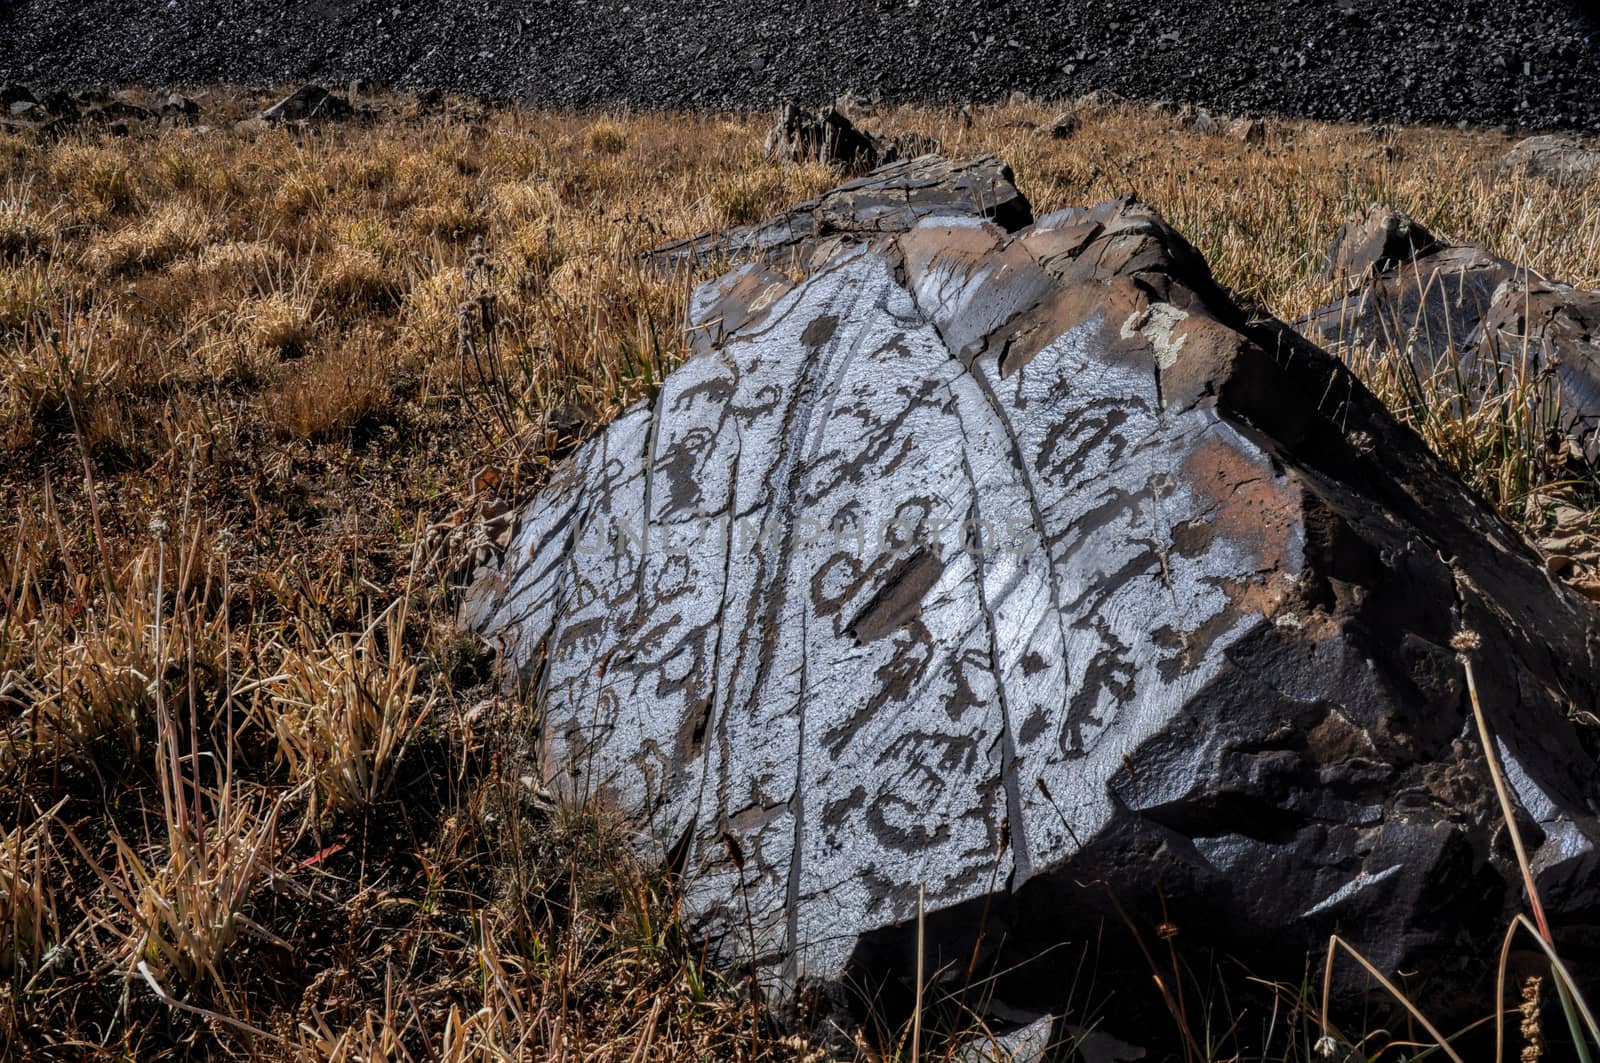 Pictograms engraved on rock on Saimaluu Tash site in Kyrgyzstan